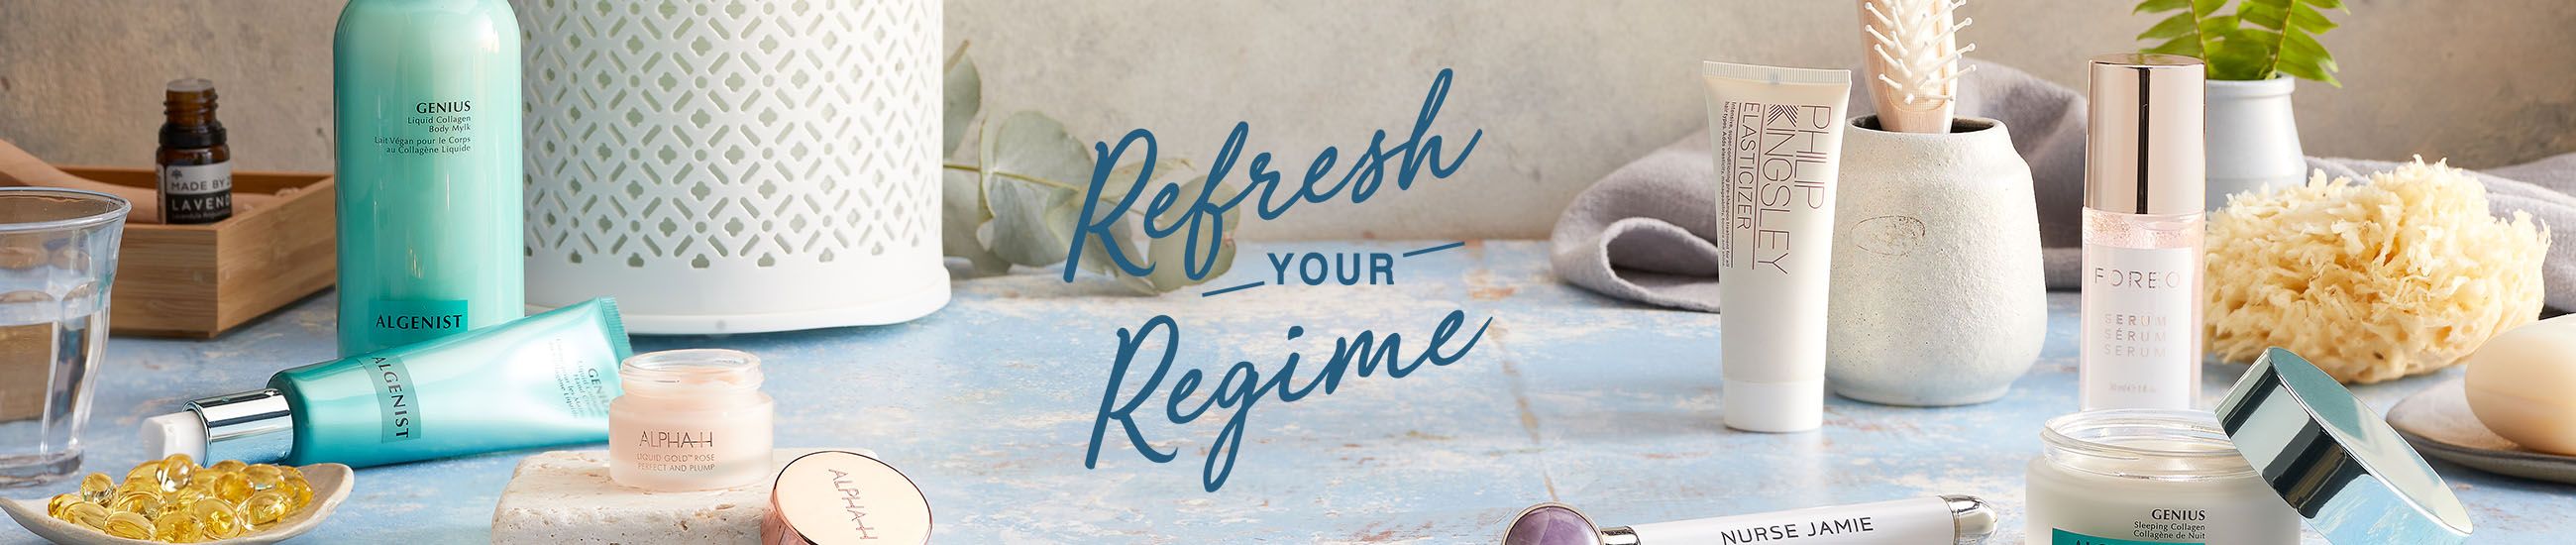 Refresh your regime